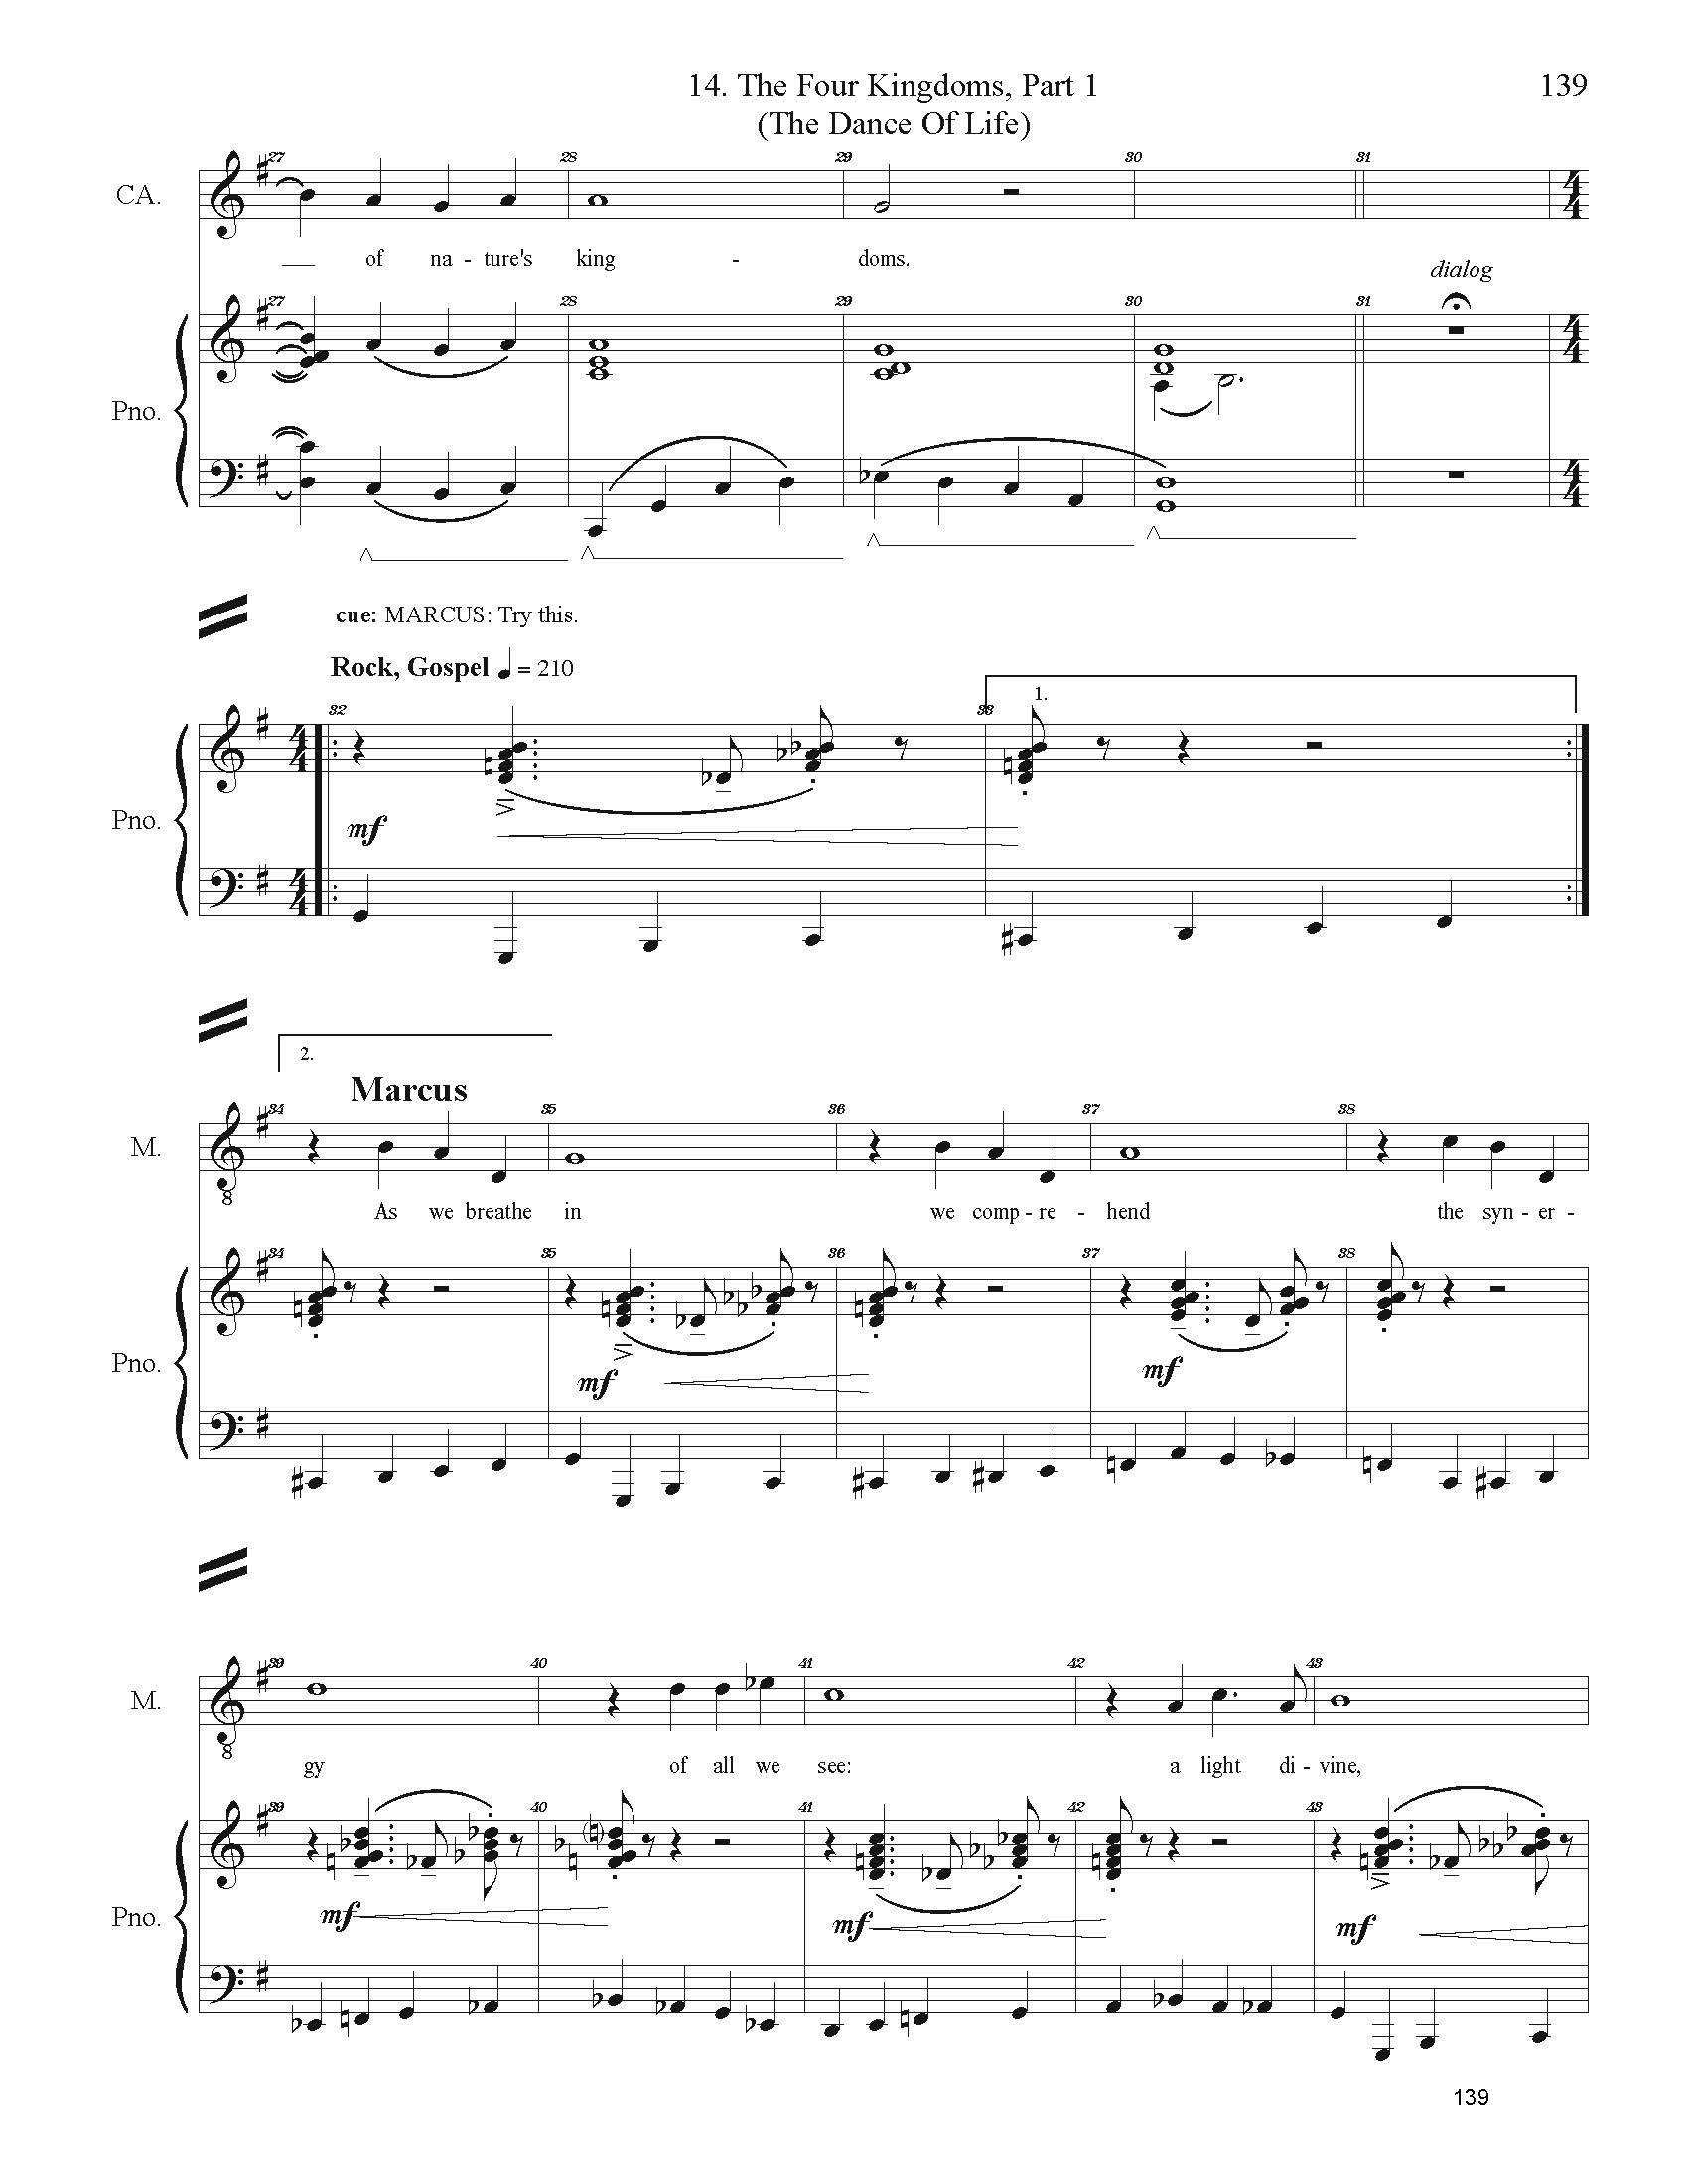 FULL PIANO VOCAL SCORE DRAFT 1 - Score_Page_139.jpg